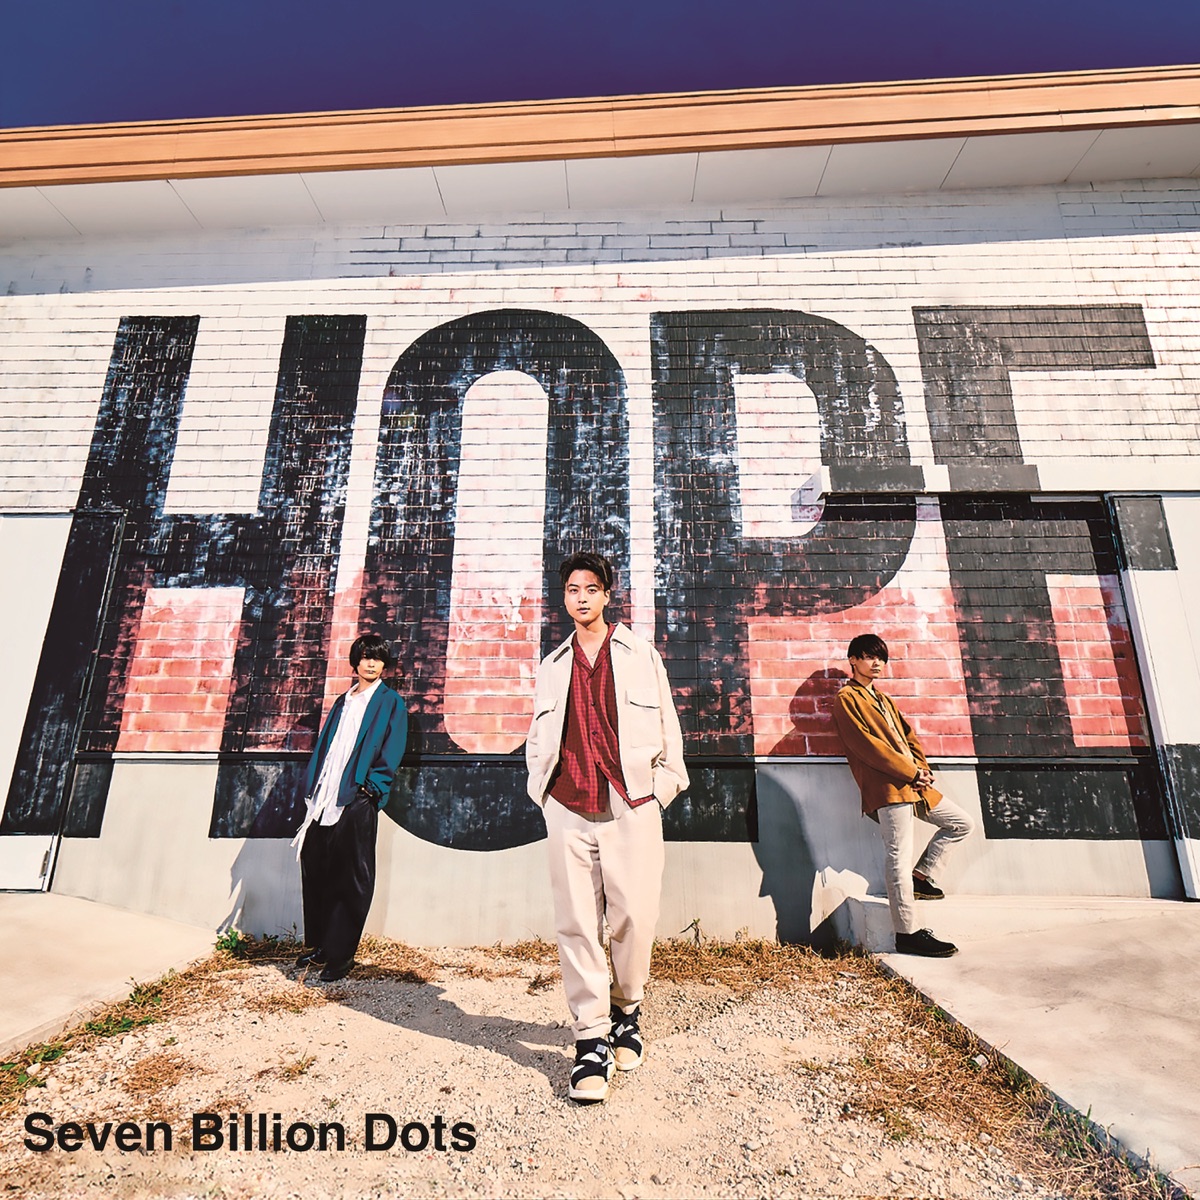 『Seven Billion Dots - Let's get the party started 歌詞』収録の『HOPE』ジャケット